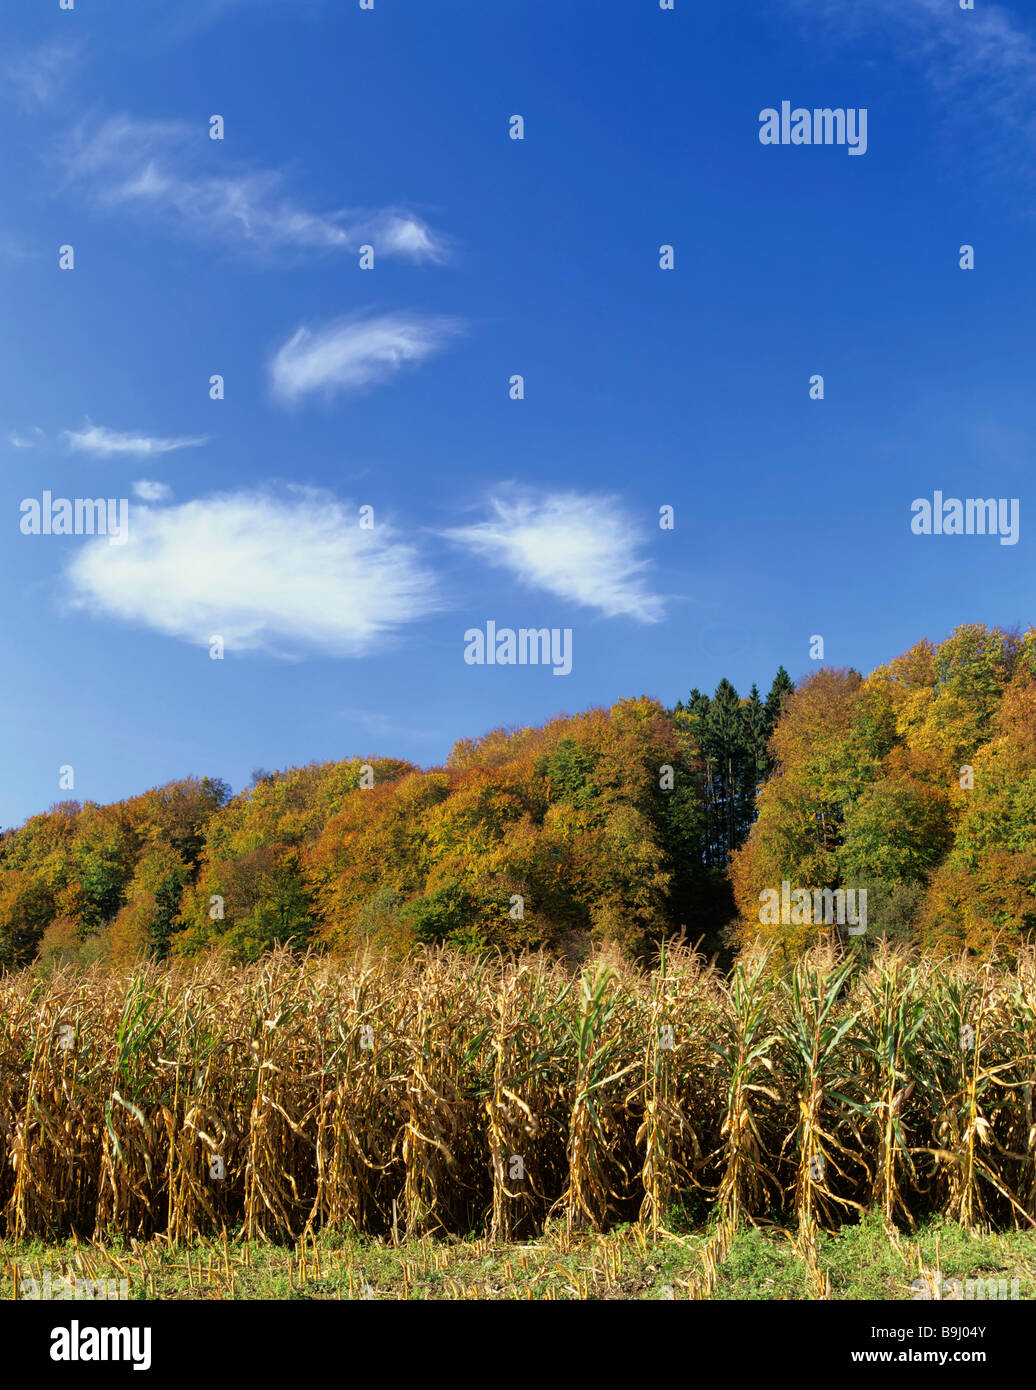 Maize (Zea mays), corn field, autumn, blue sky, foehn clouds Stock Photo